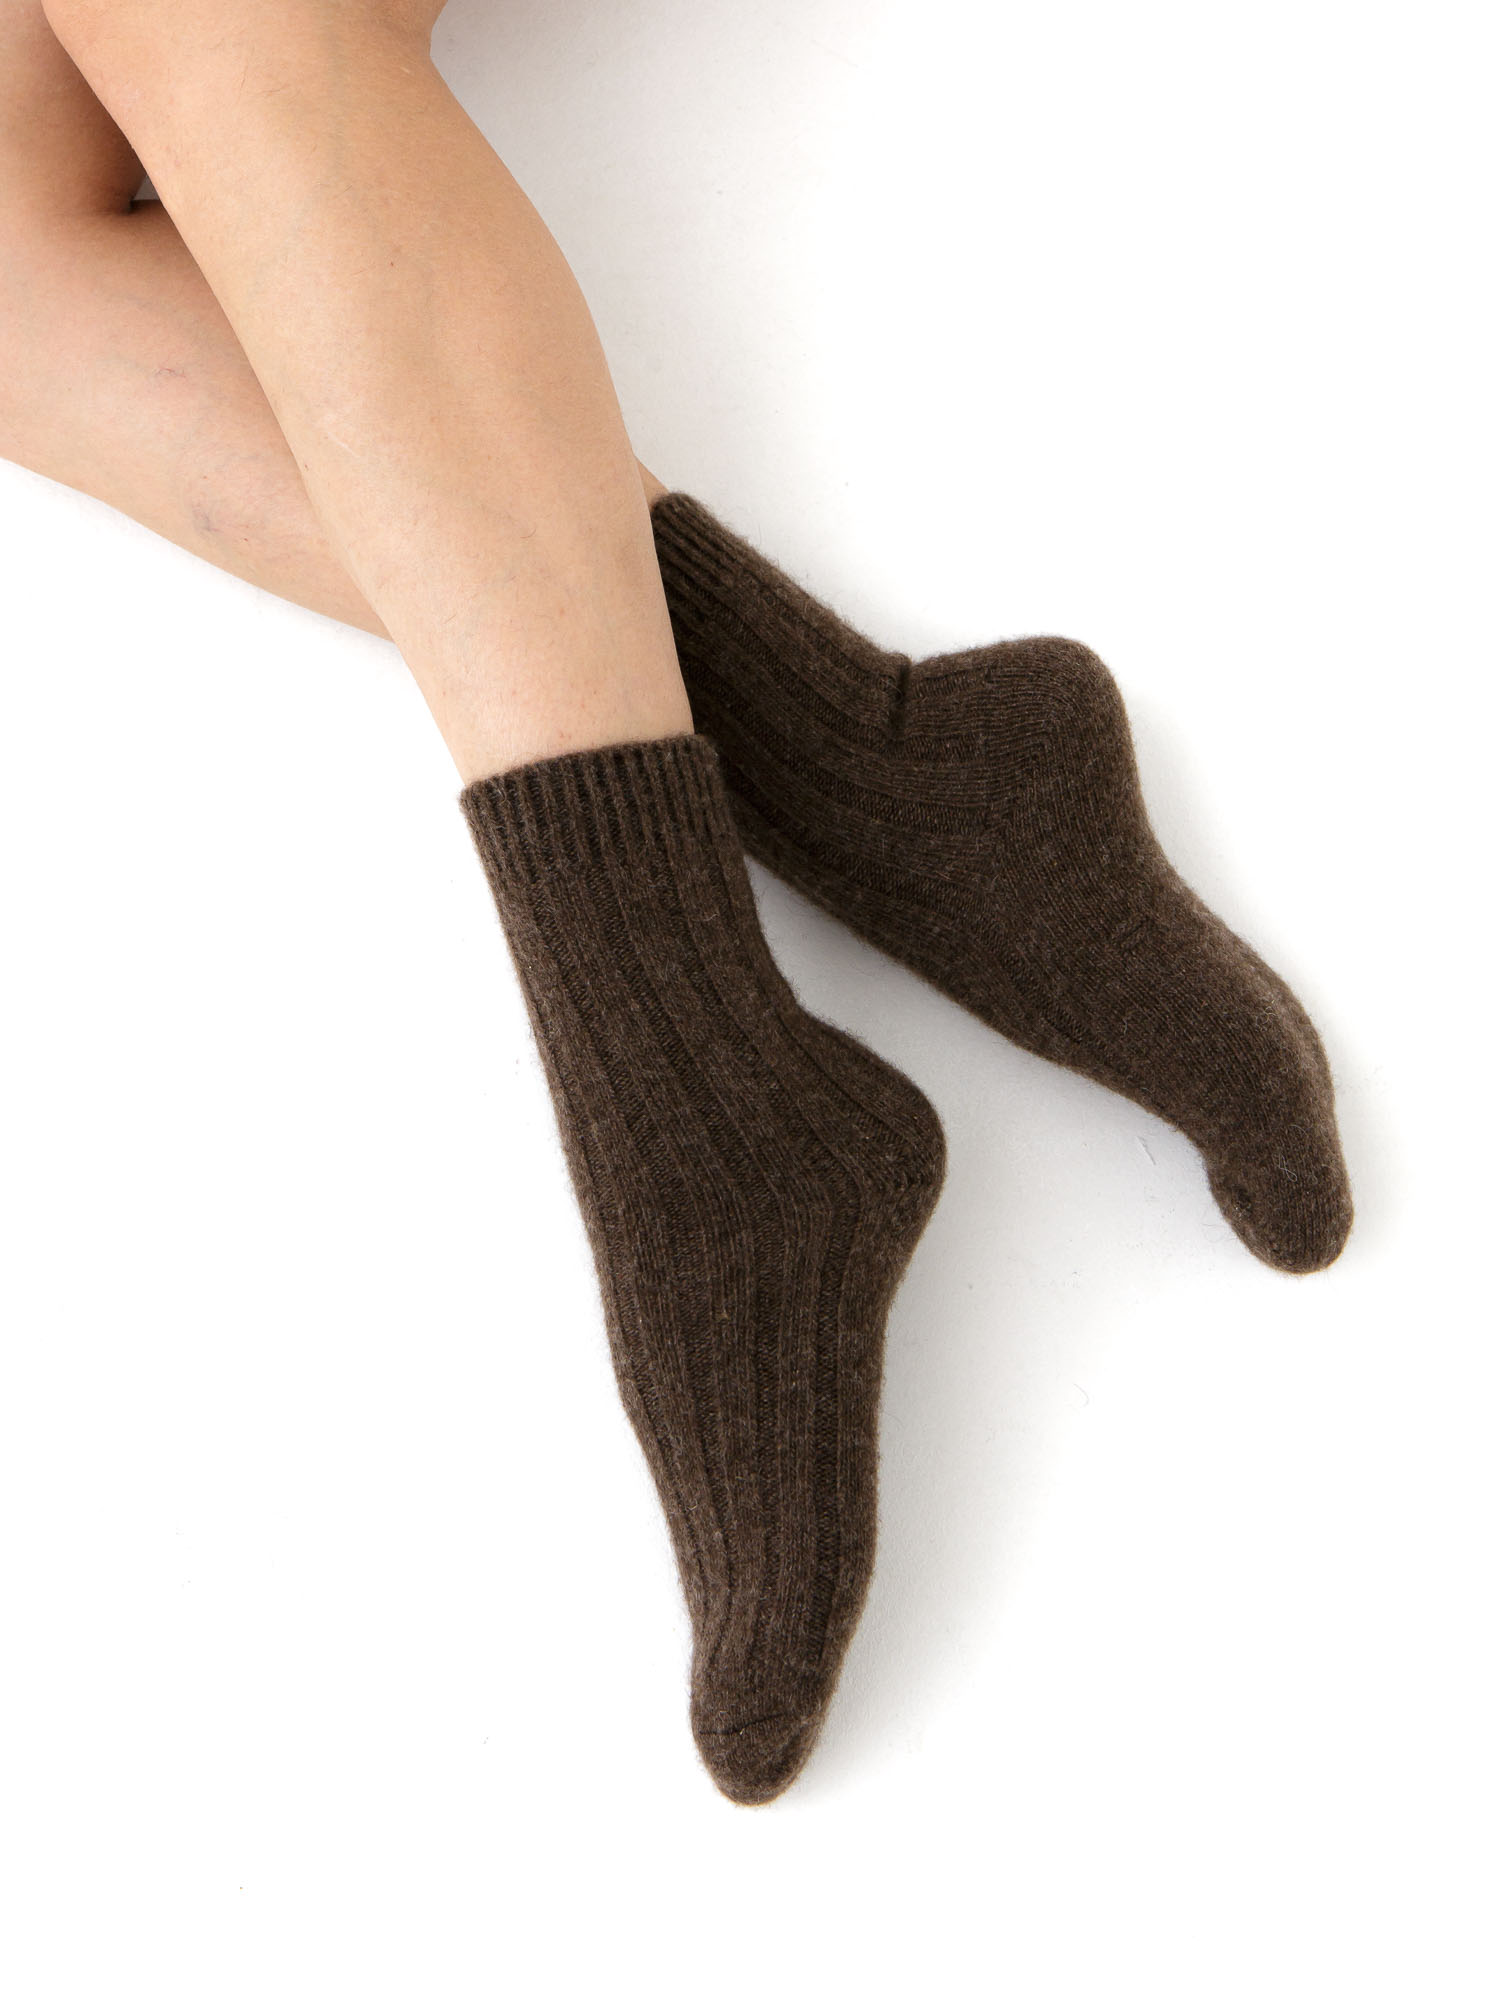 Теплые носки из 100% шерсти темно-коричневые 34-36